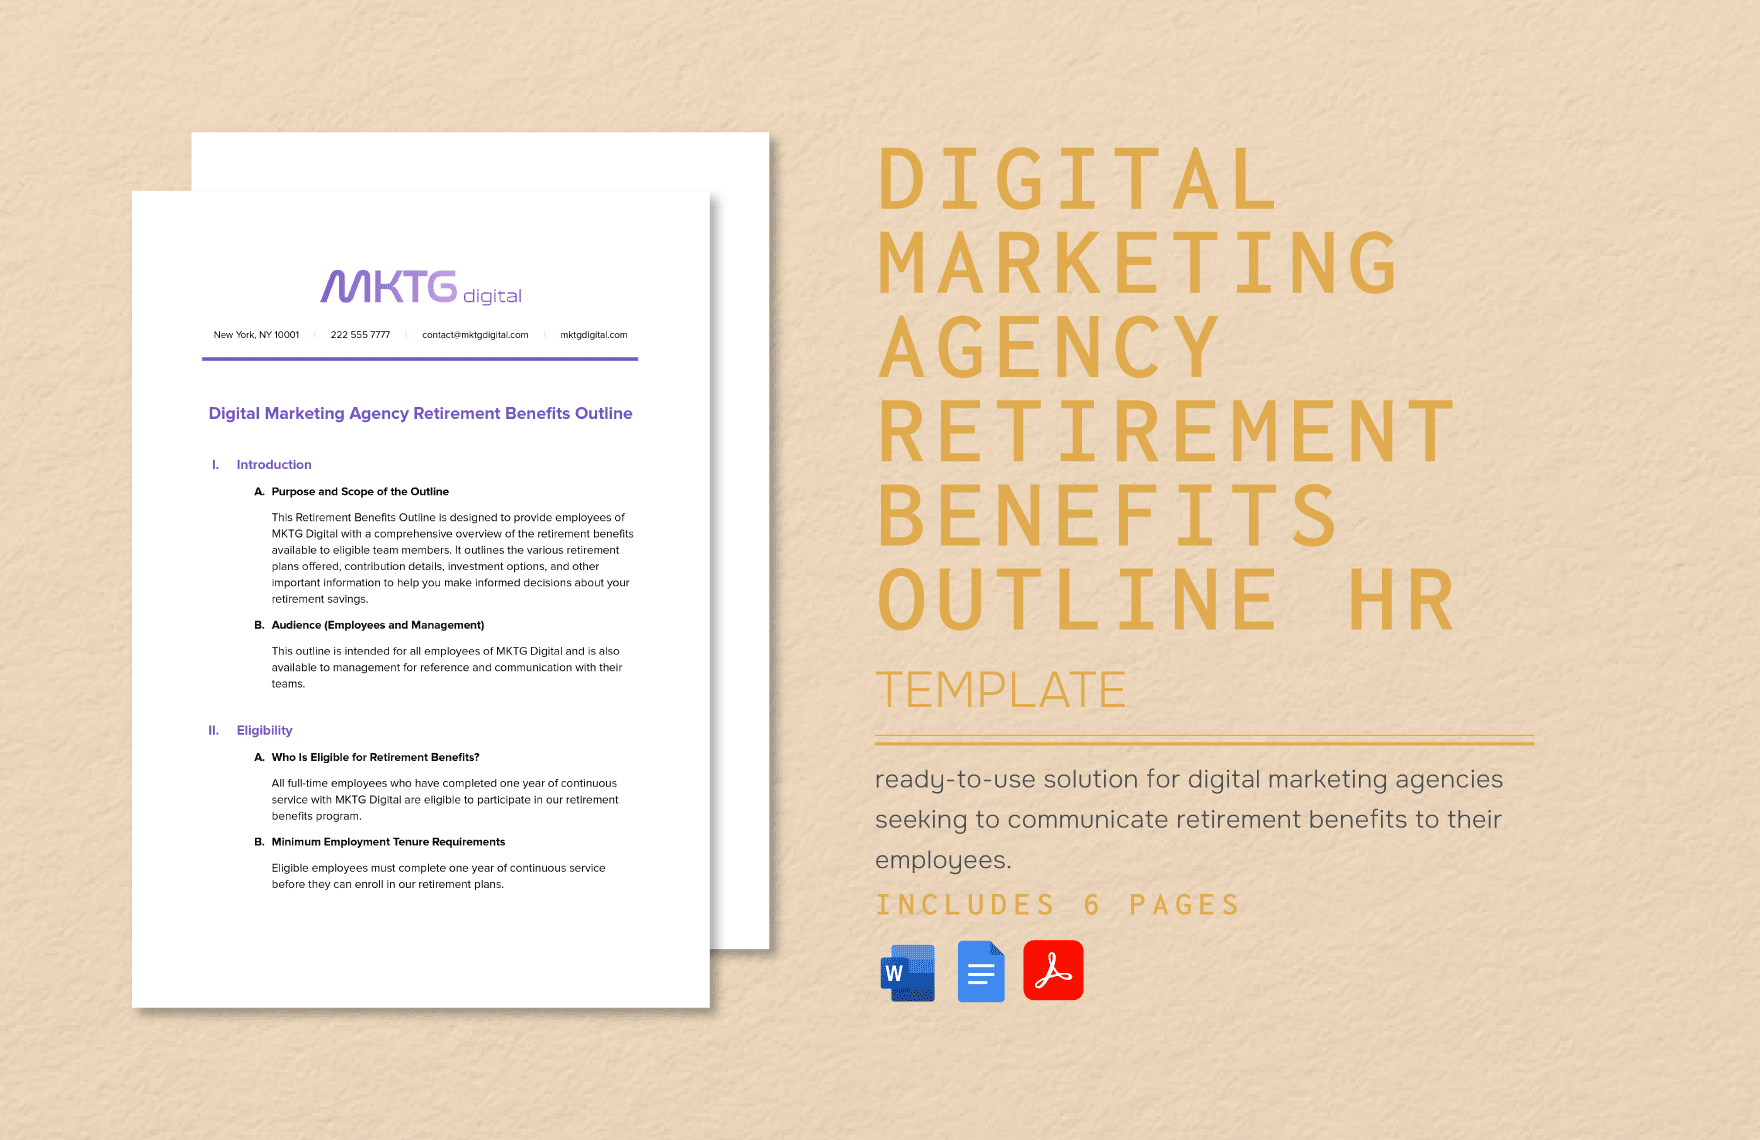 Digital Marketing Agency Retirement Benefits Outline HR Template in Word, Google Docs, PDF